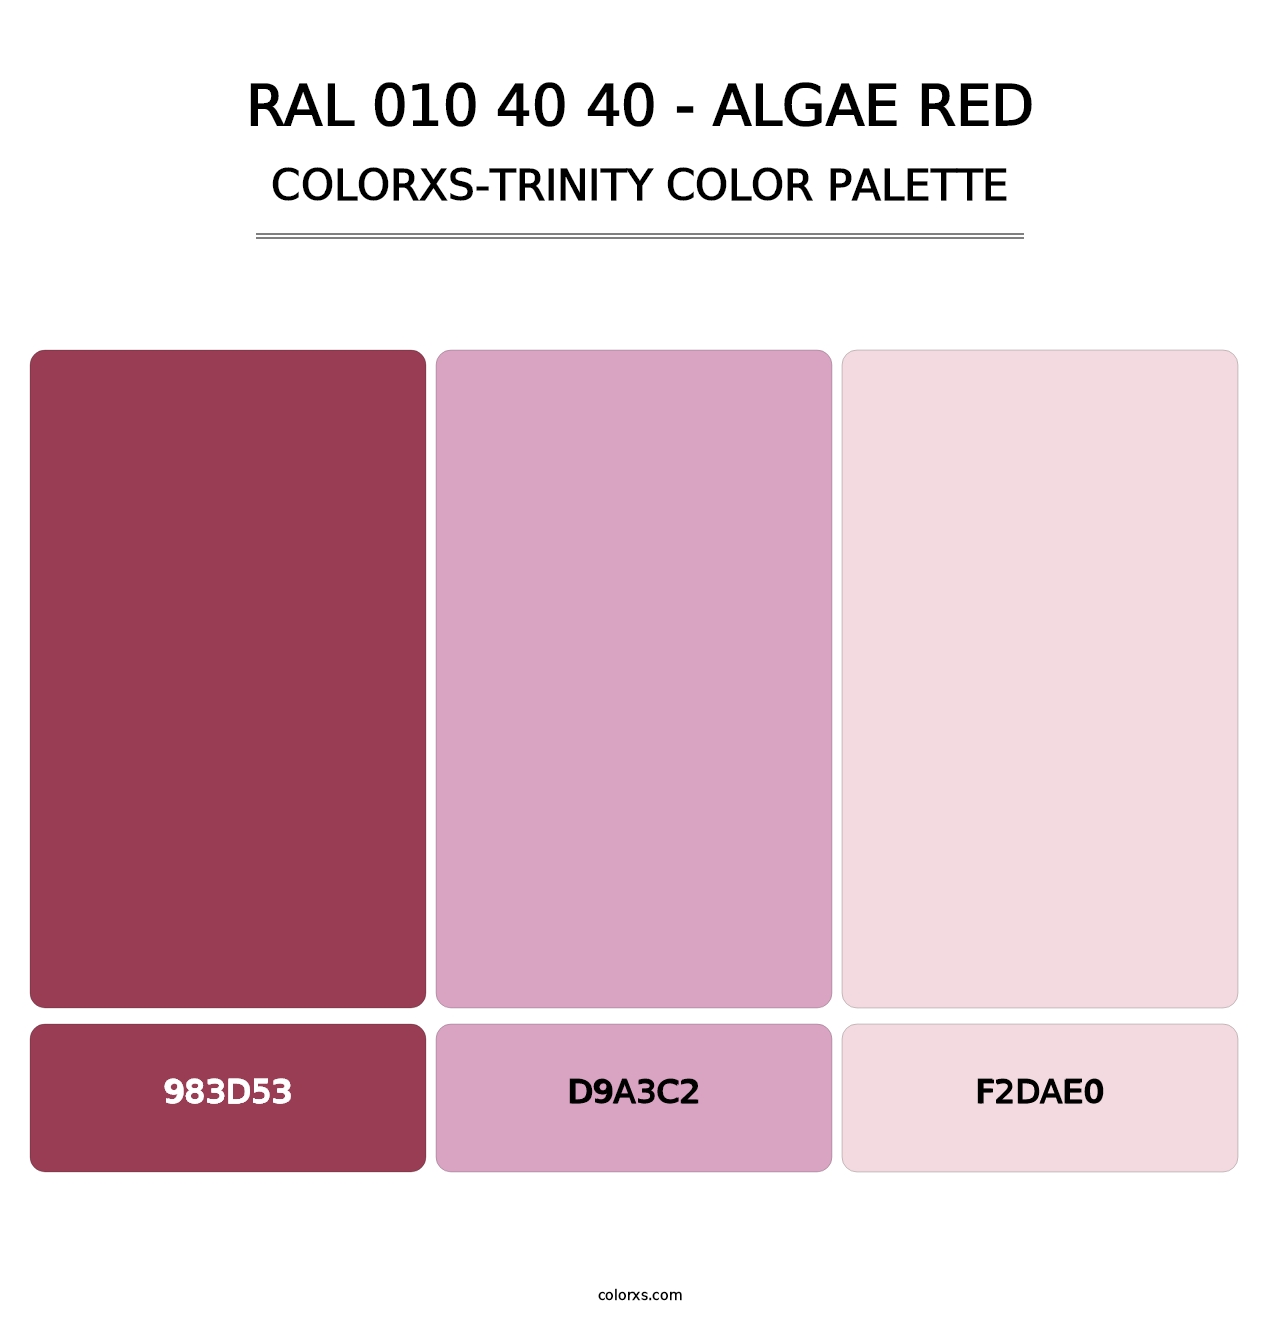 RAL 010 40 40 - Algae Red - Colorxs Trinity Palette